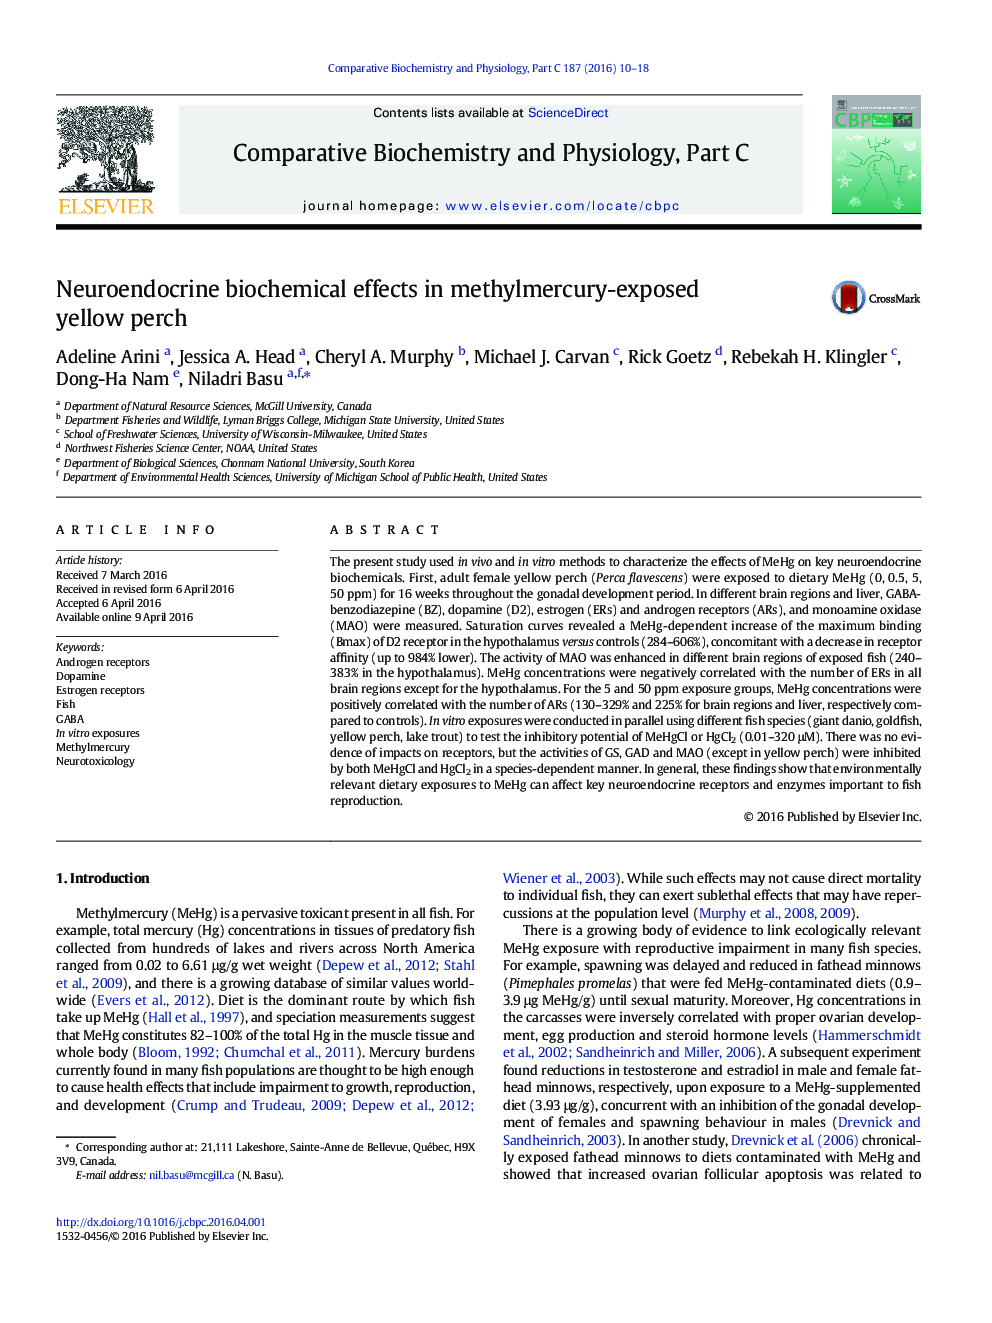 Neuroendocrine biochemical effects in methylmercury-exposed yellow perch